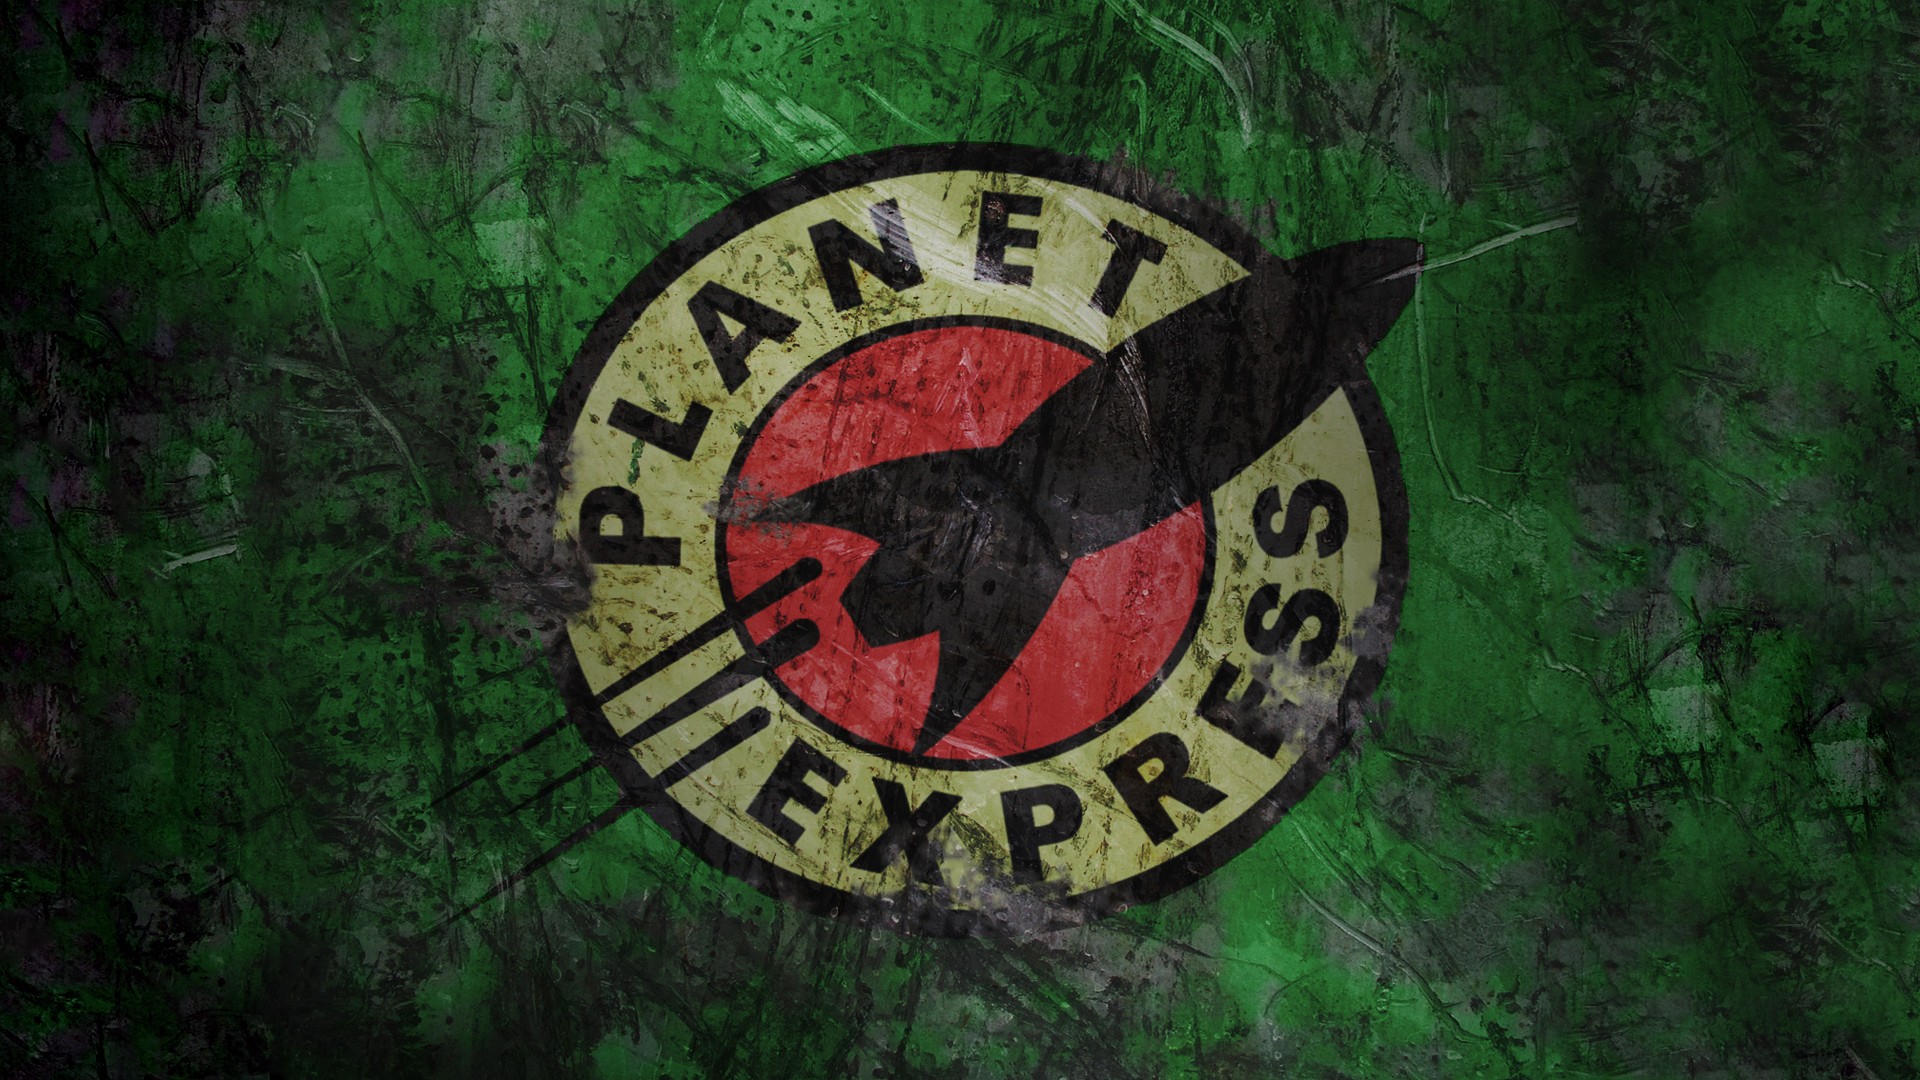 General 1920x1080 Futurama planet express logo fictional logo TV series science fiction